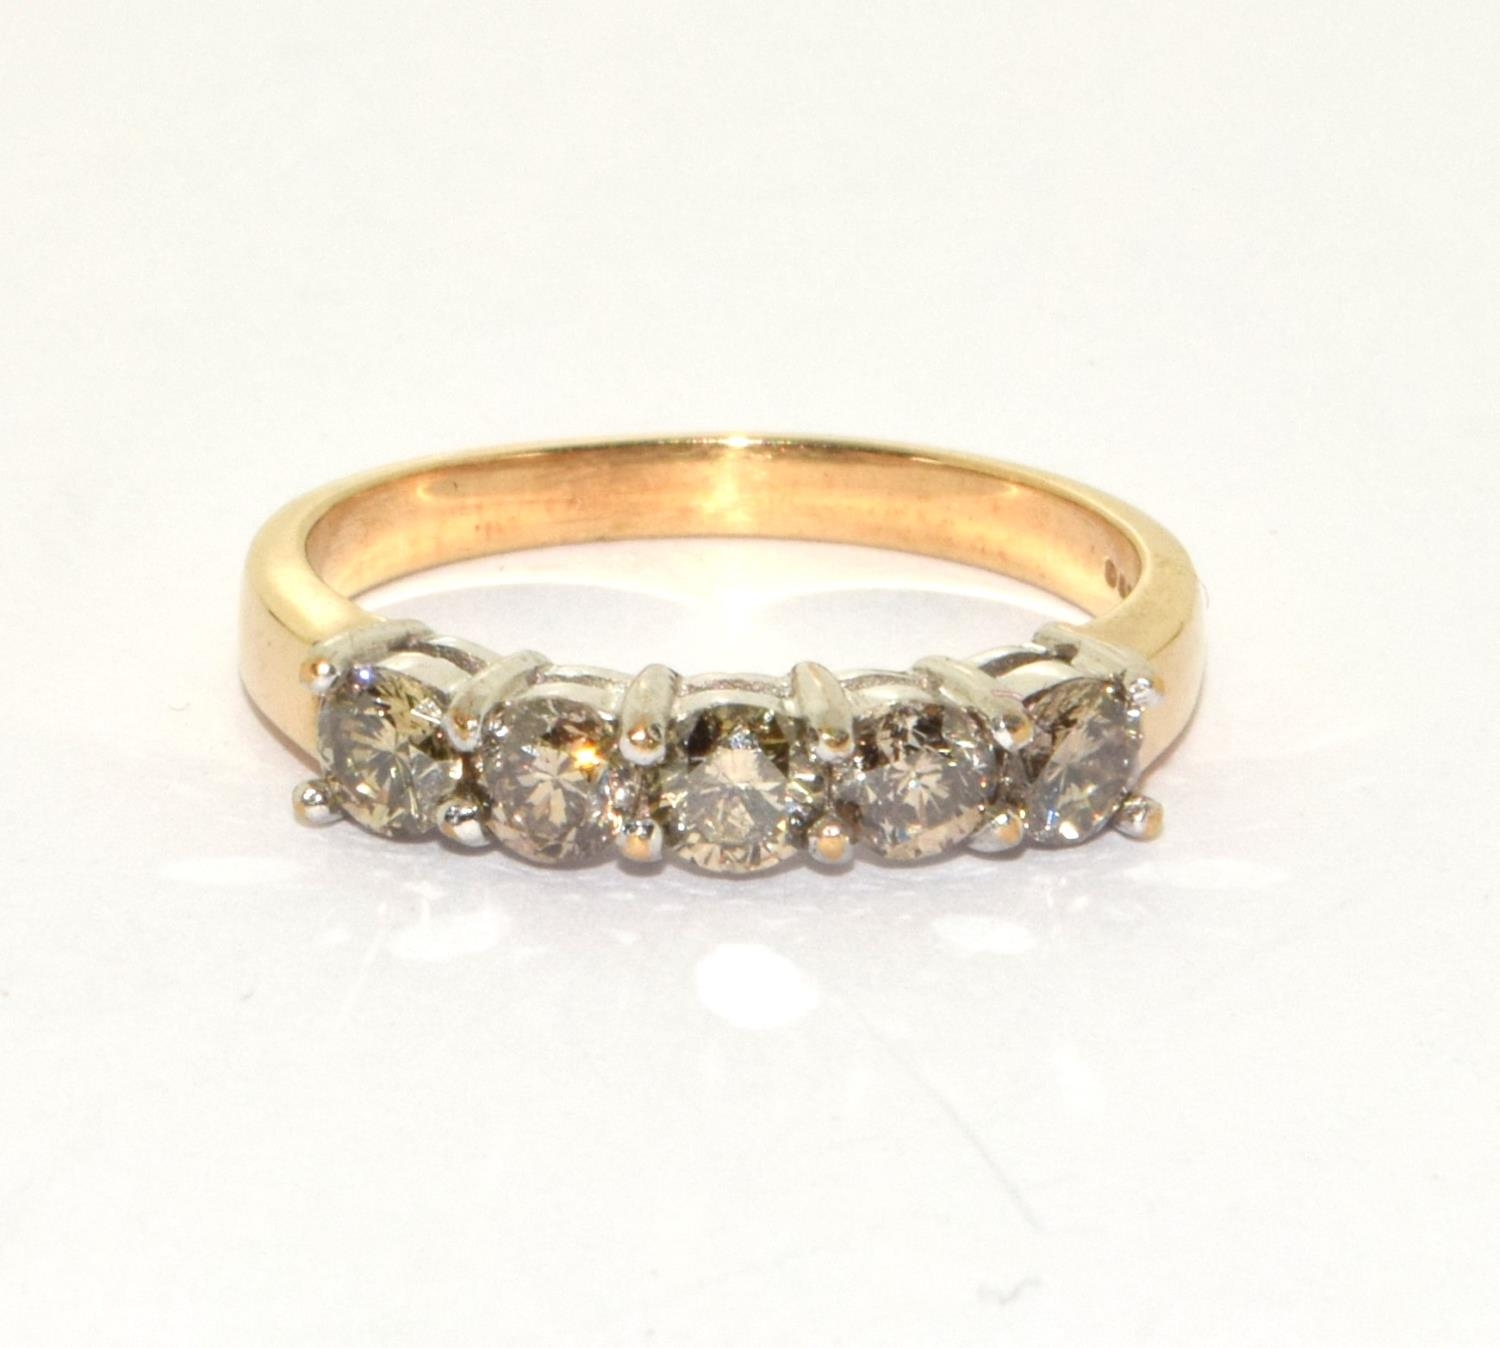 9ct gold 5 stone diamond ring size N